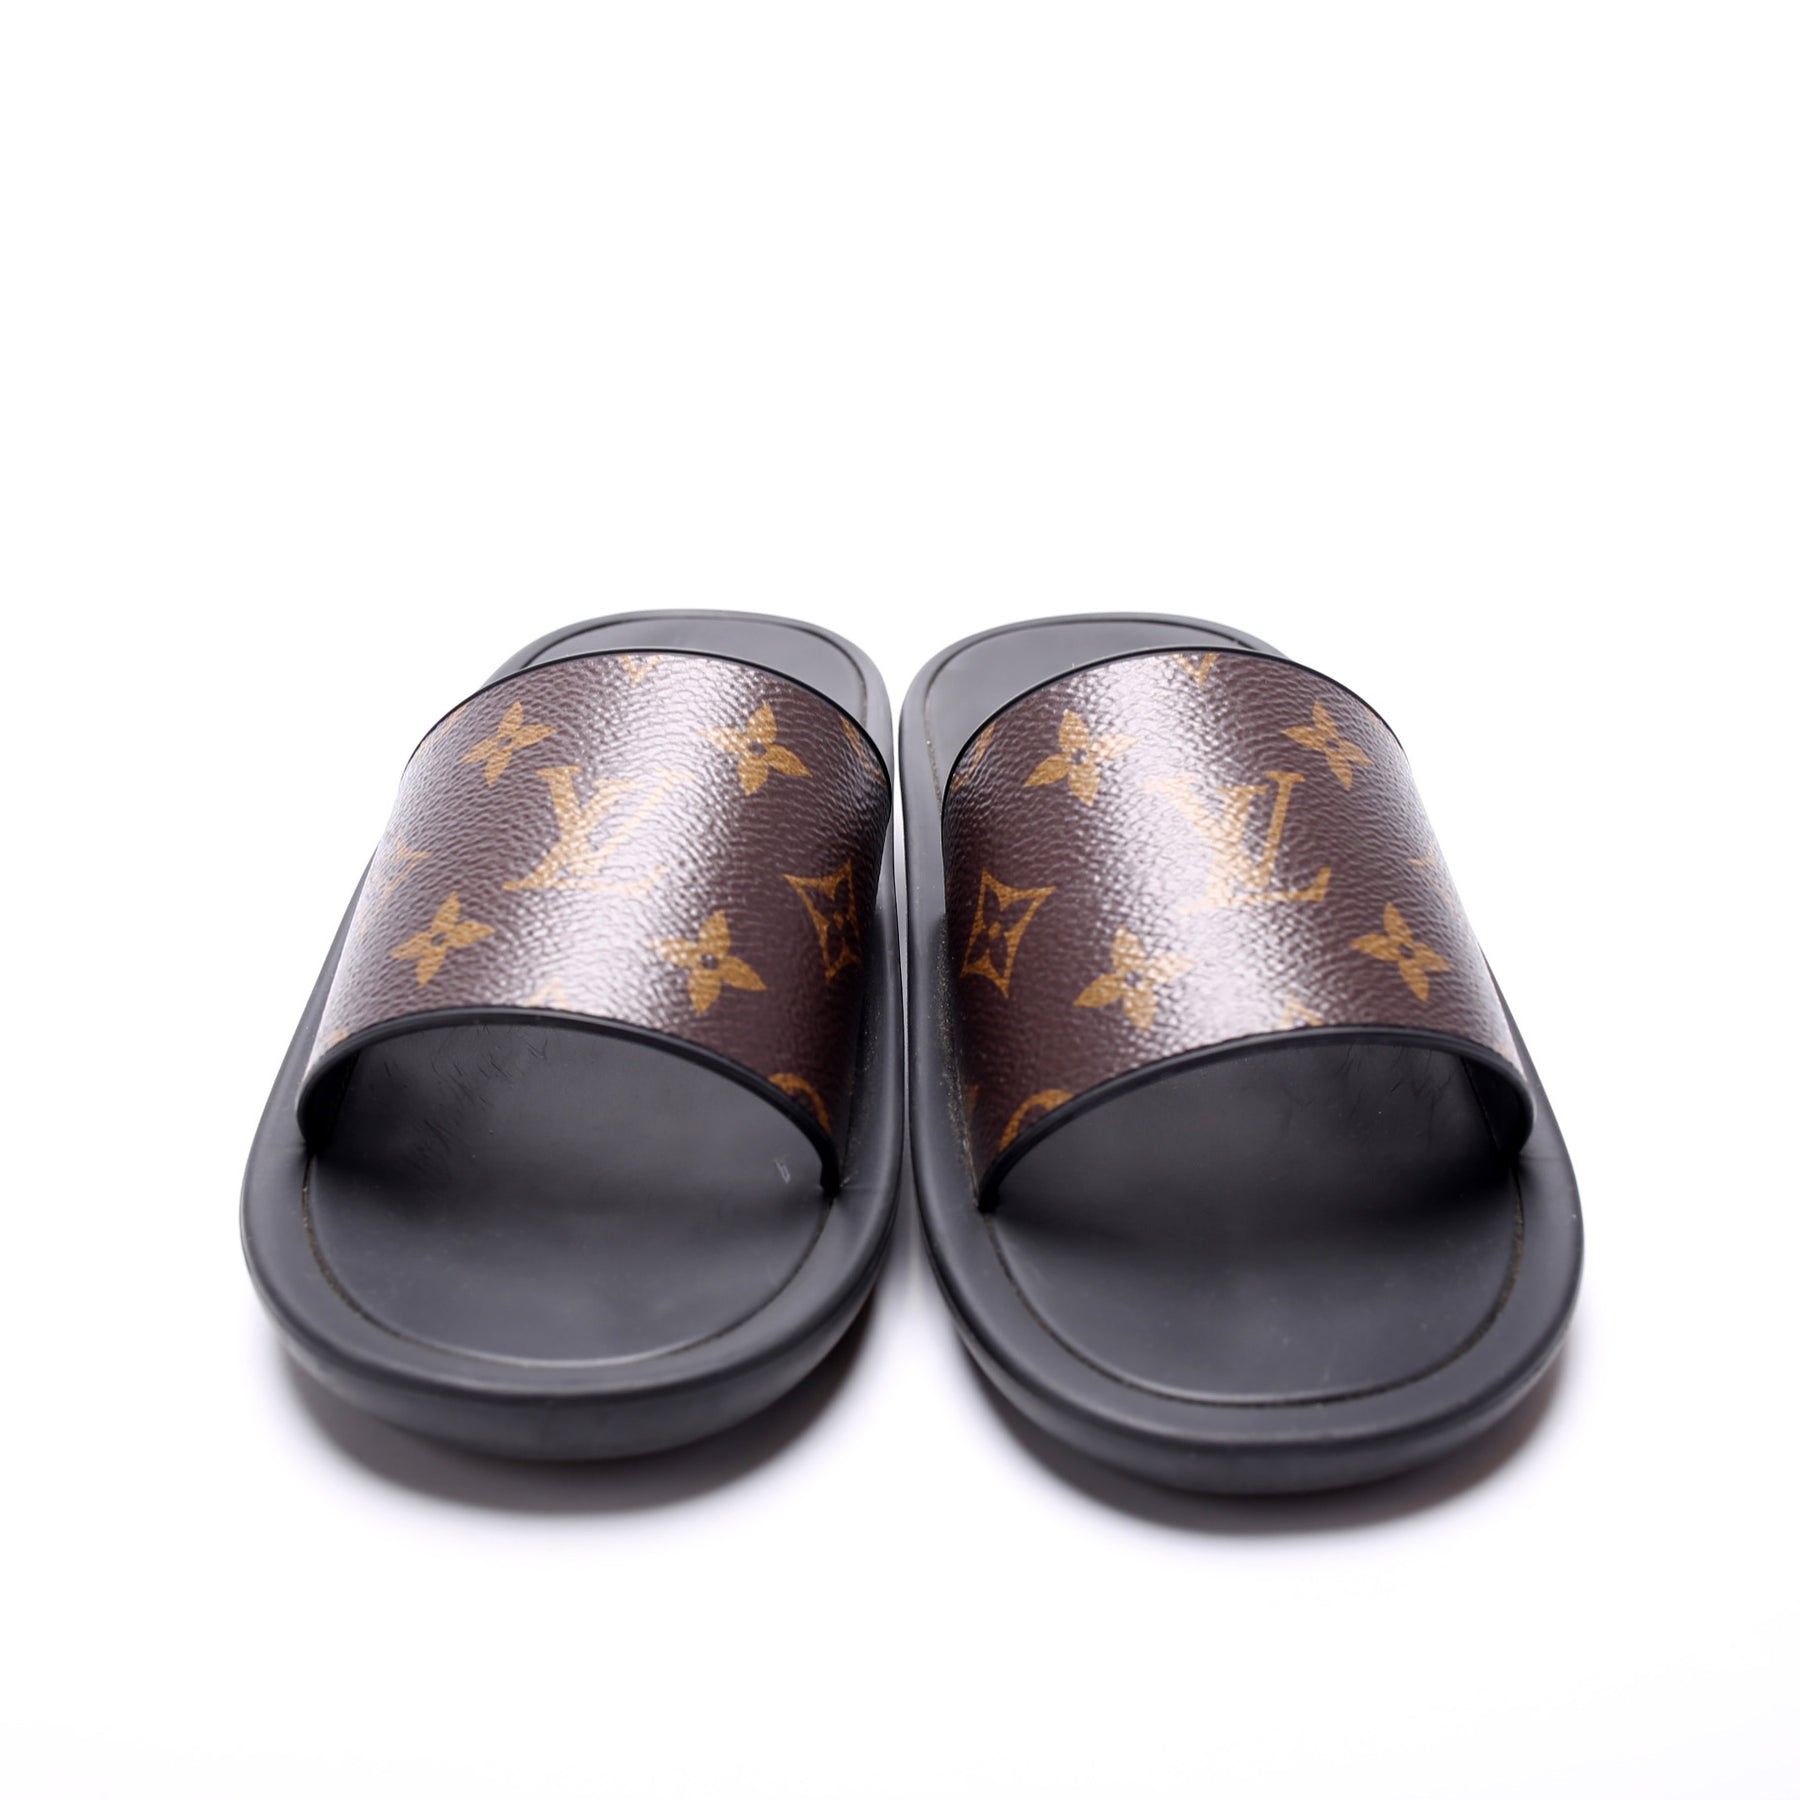 Louis Vuitton Men's 37 Sunbath Flat Mule Sandal